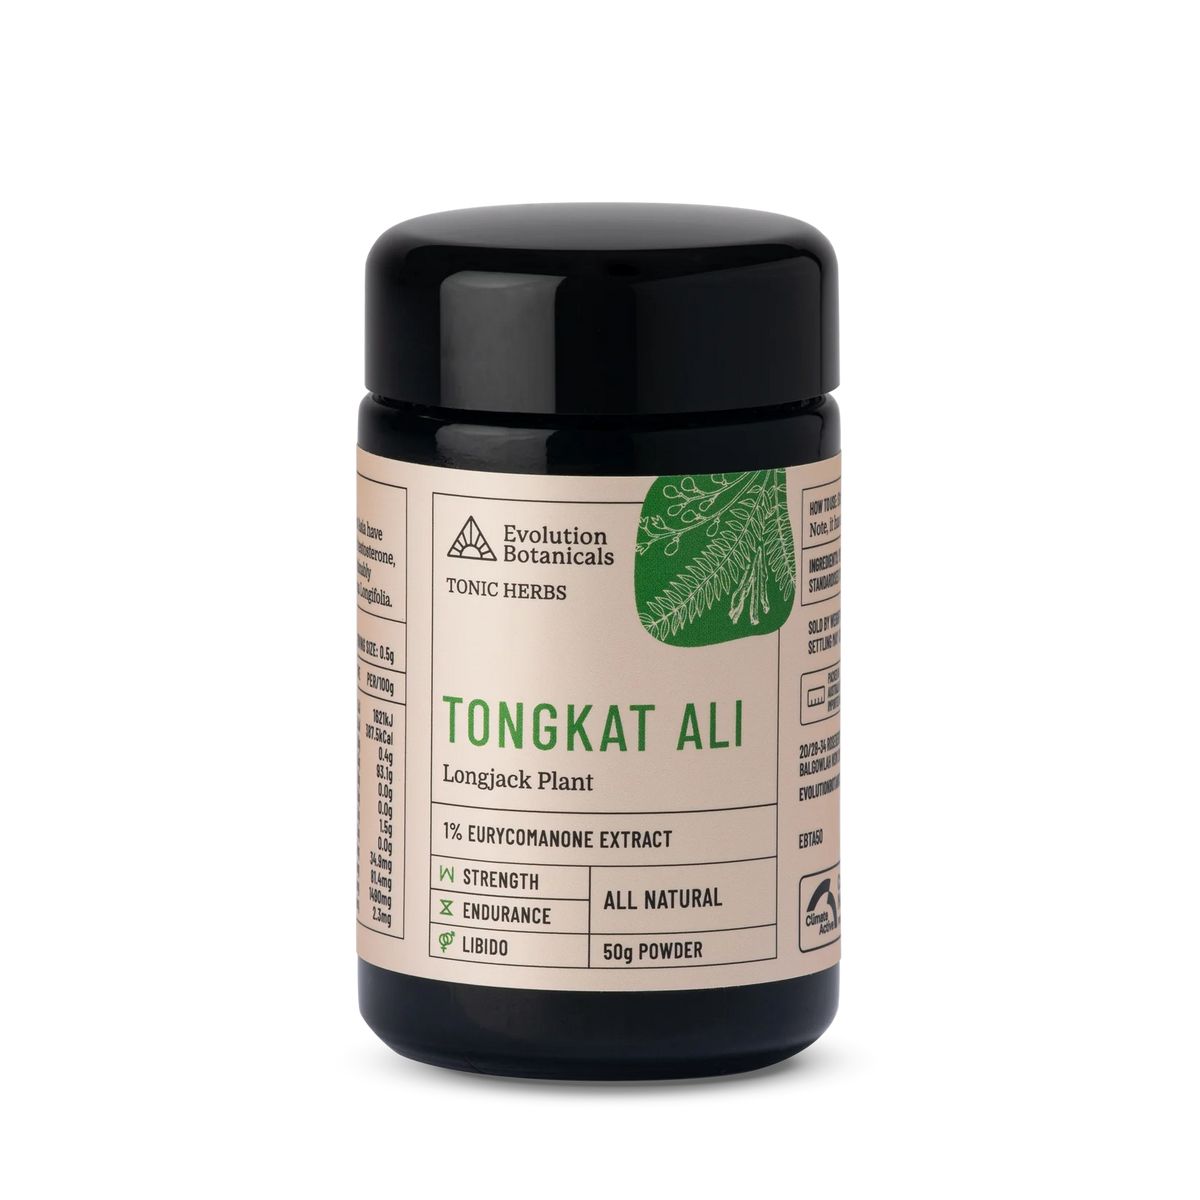 Tongkat Ali // Longjack Plant 50g Powder